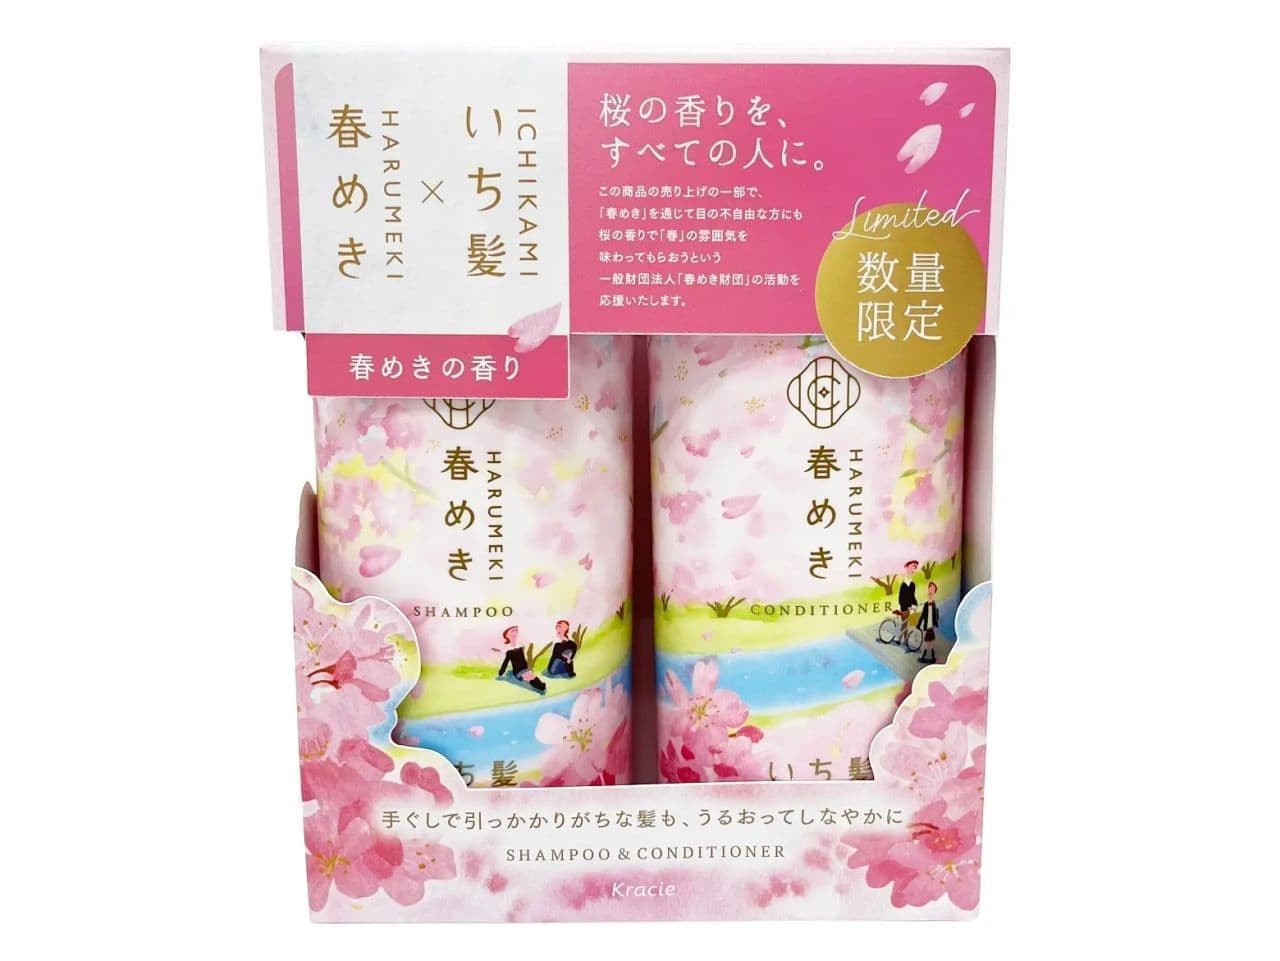 Ichikami Harumeki Fragrance "Shampoo & Conditioner